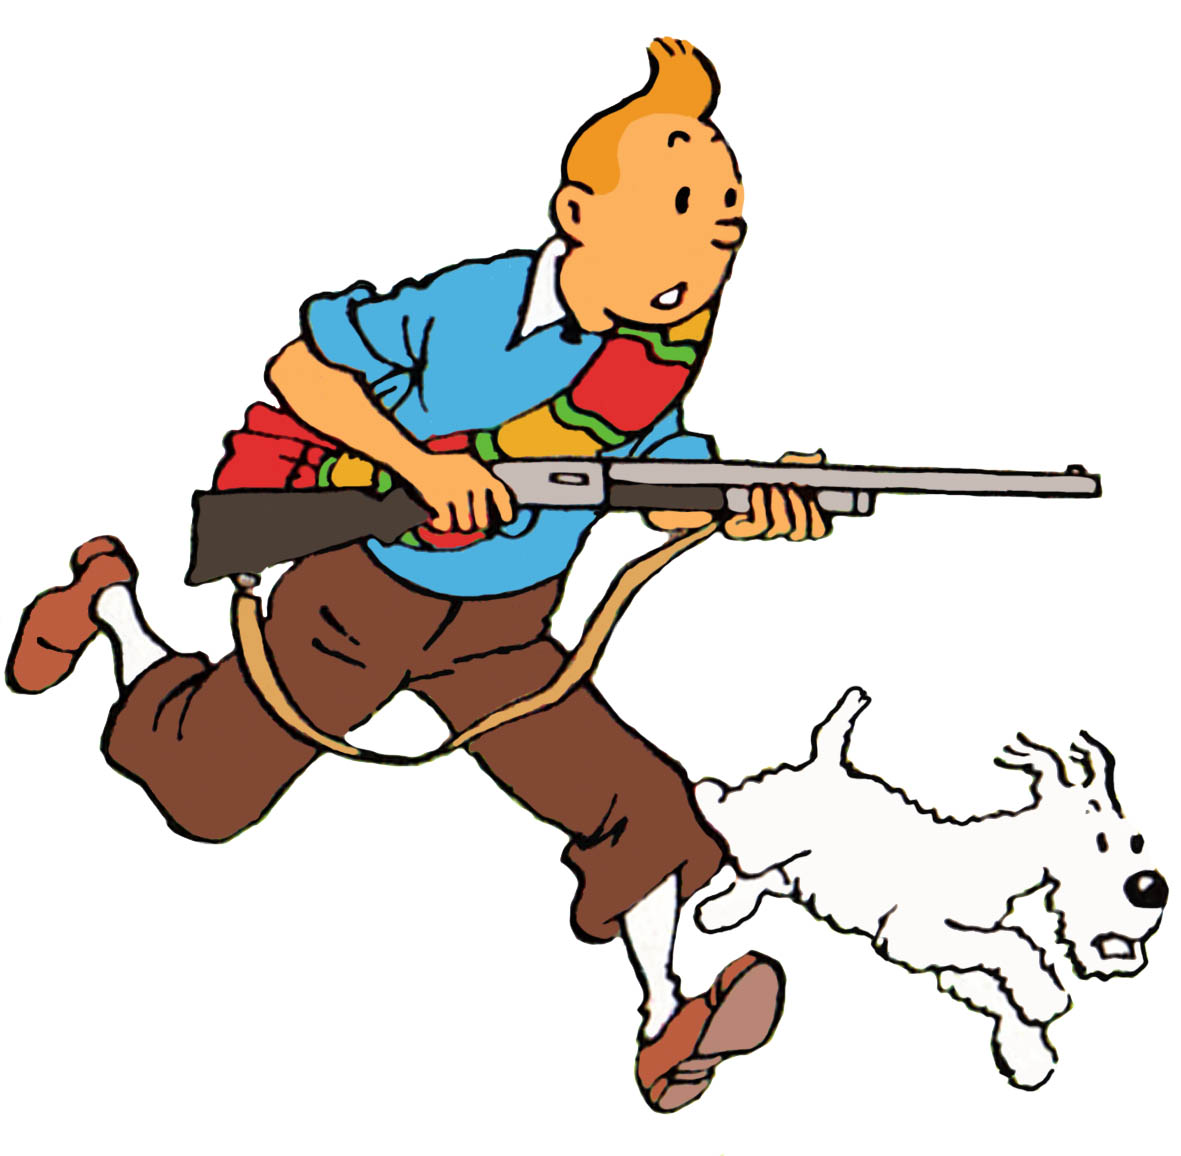 Source: Tintin Wikia